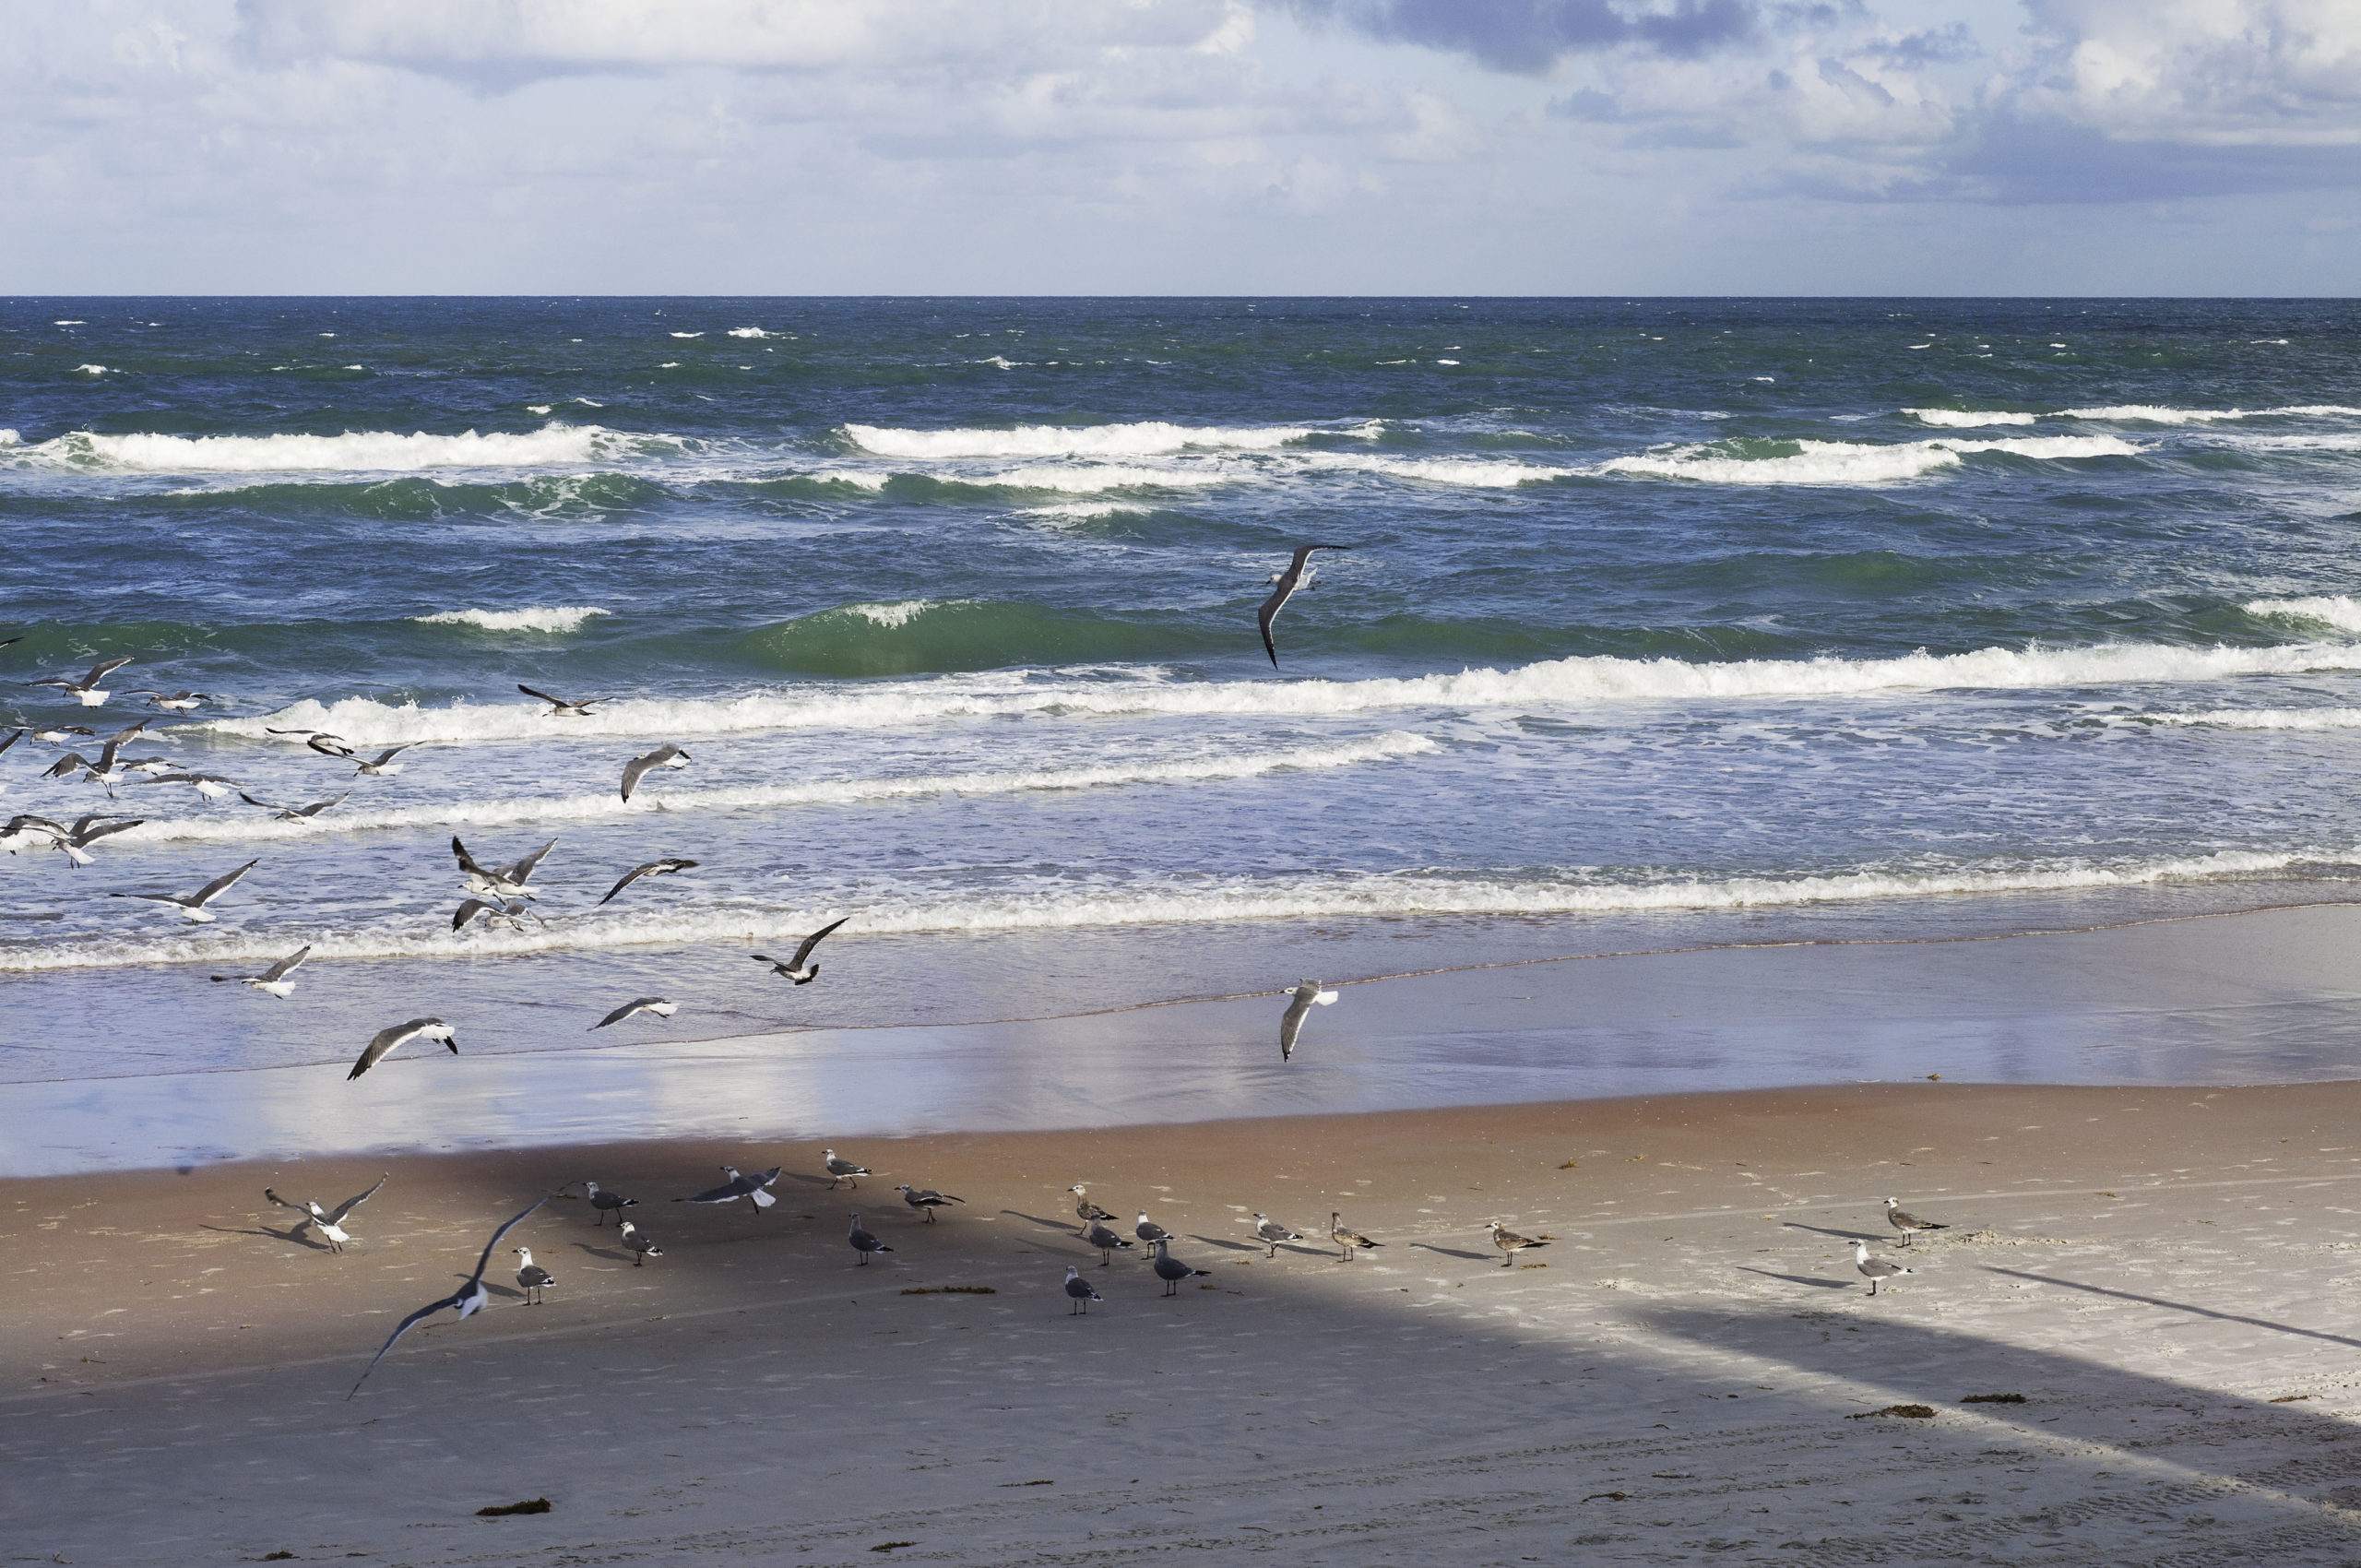 Many seabirds flying around on scenic beach